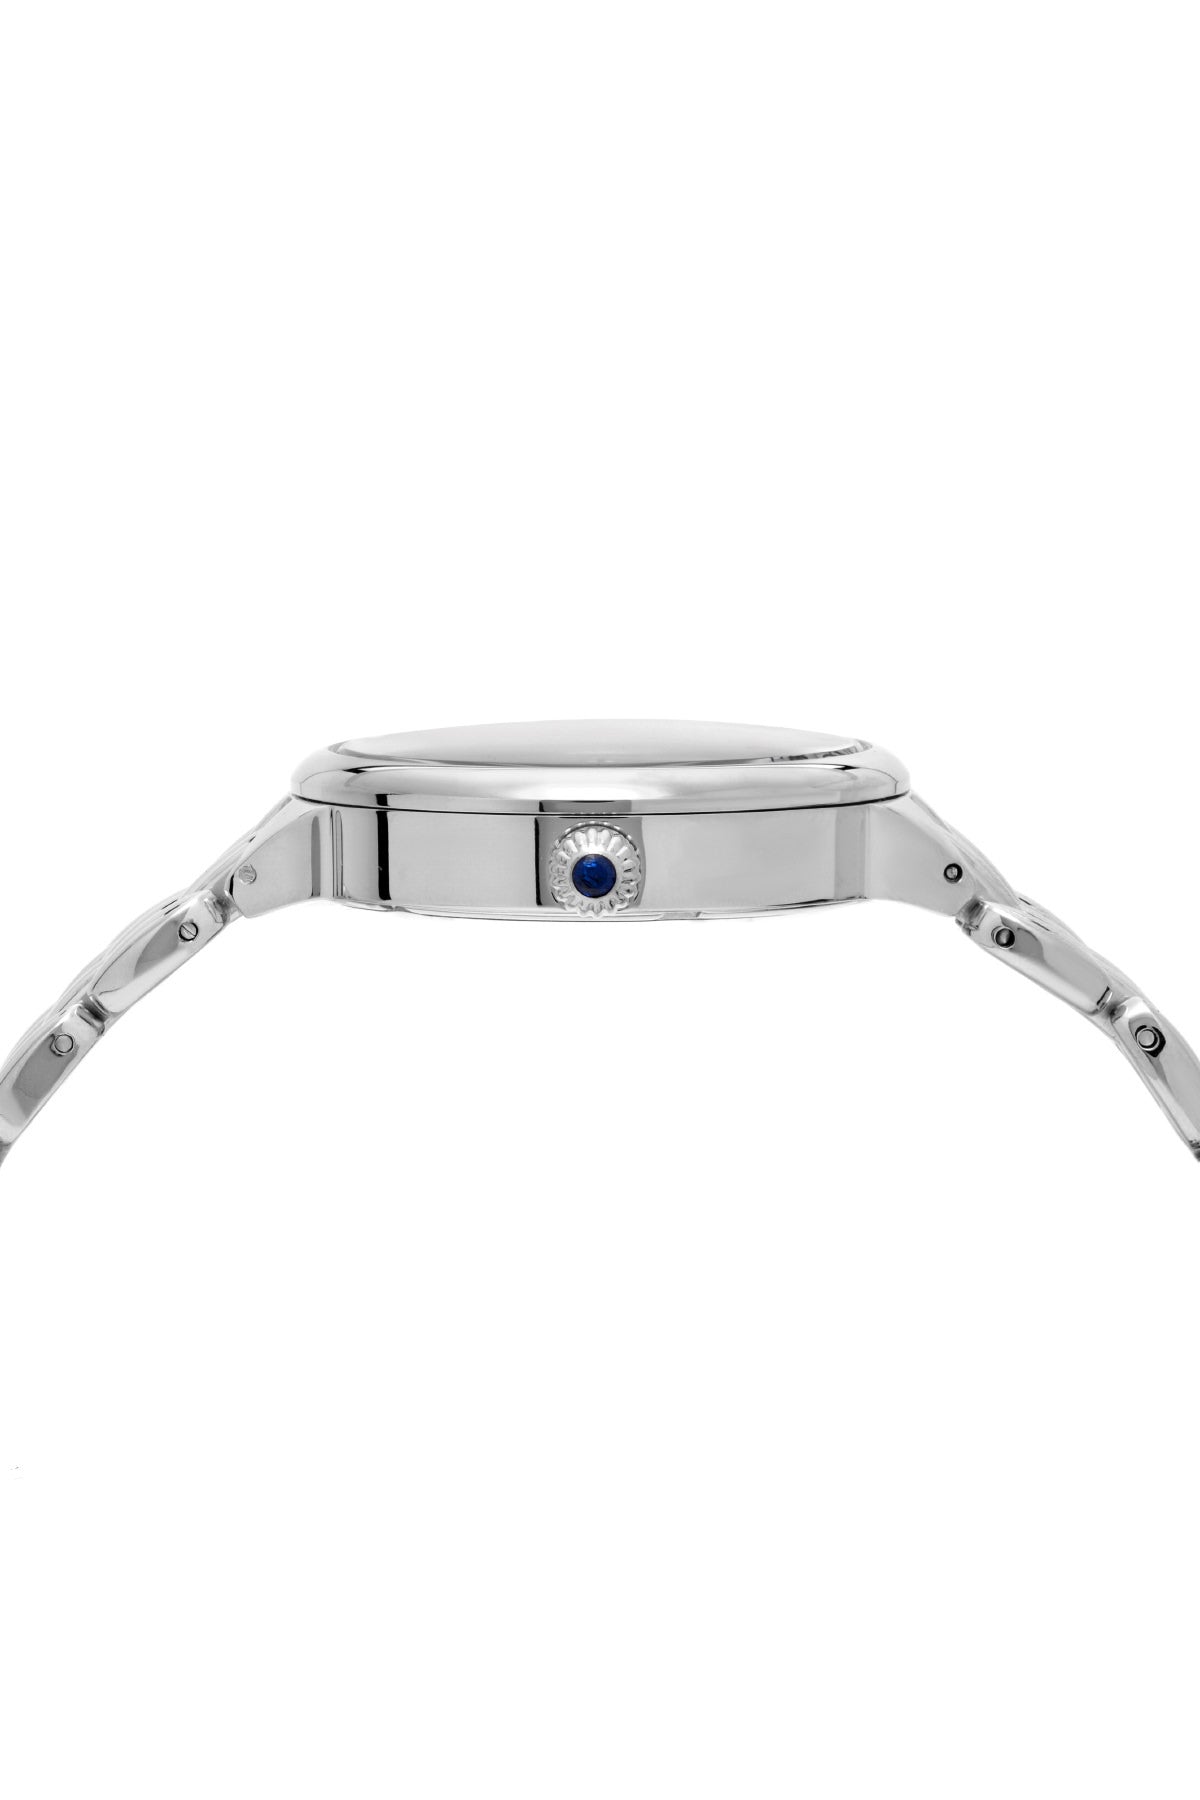 Porsamo Bleu Blair luxury diamond women's stainless steel watch, silver, white 711ABLS